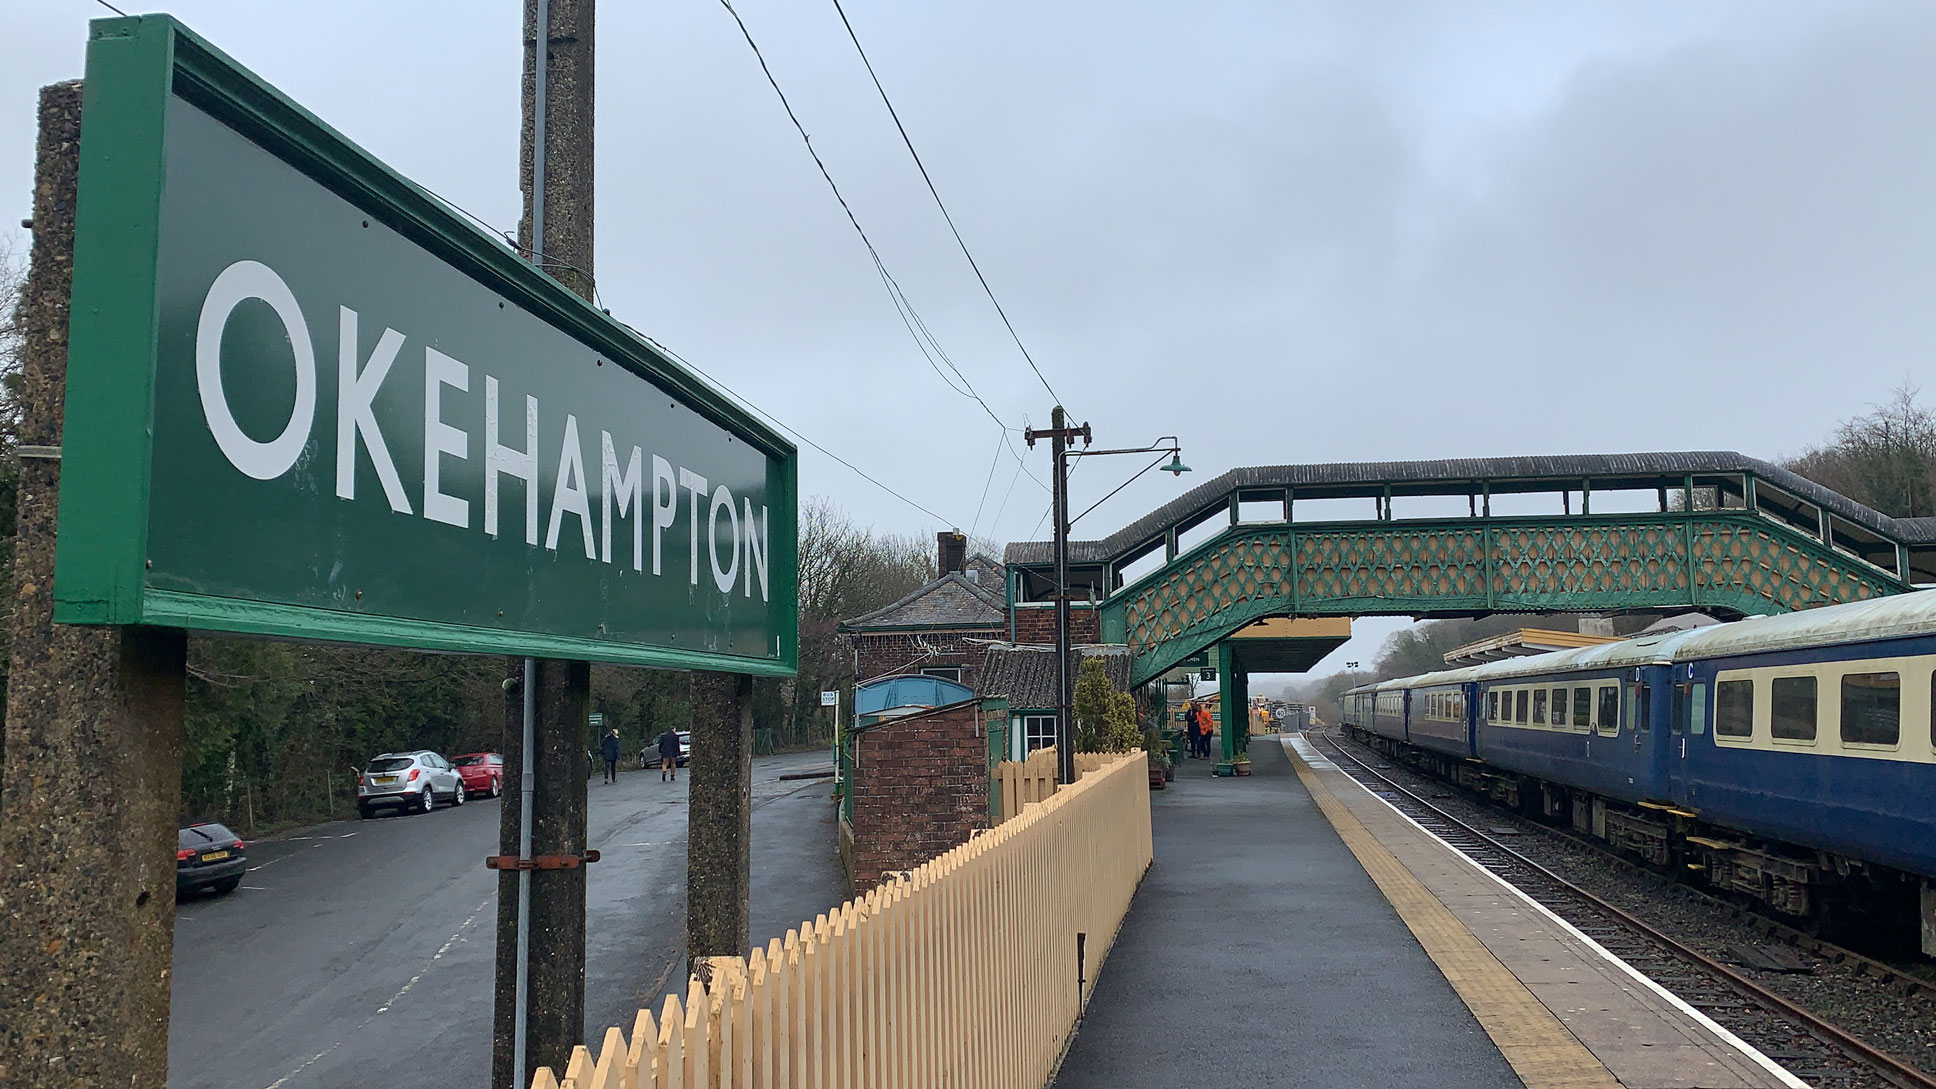 Okehampton station platform, daytime